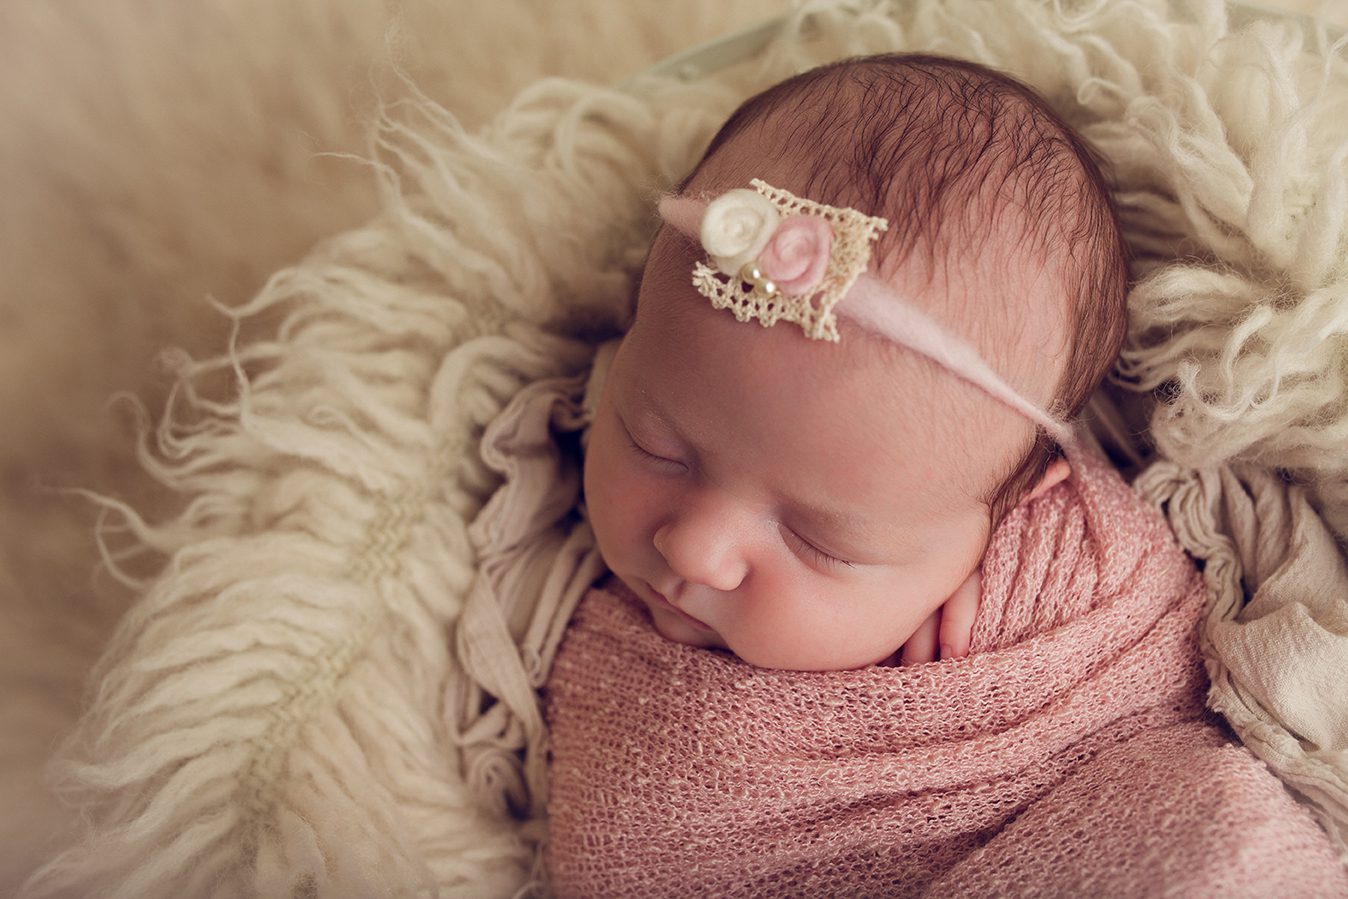 edmonton newborn photographer - wrapped in pink in bucket